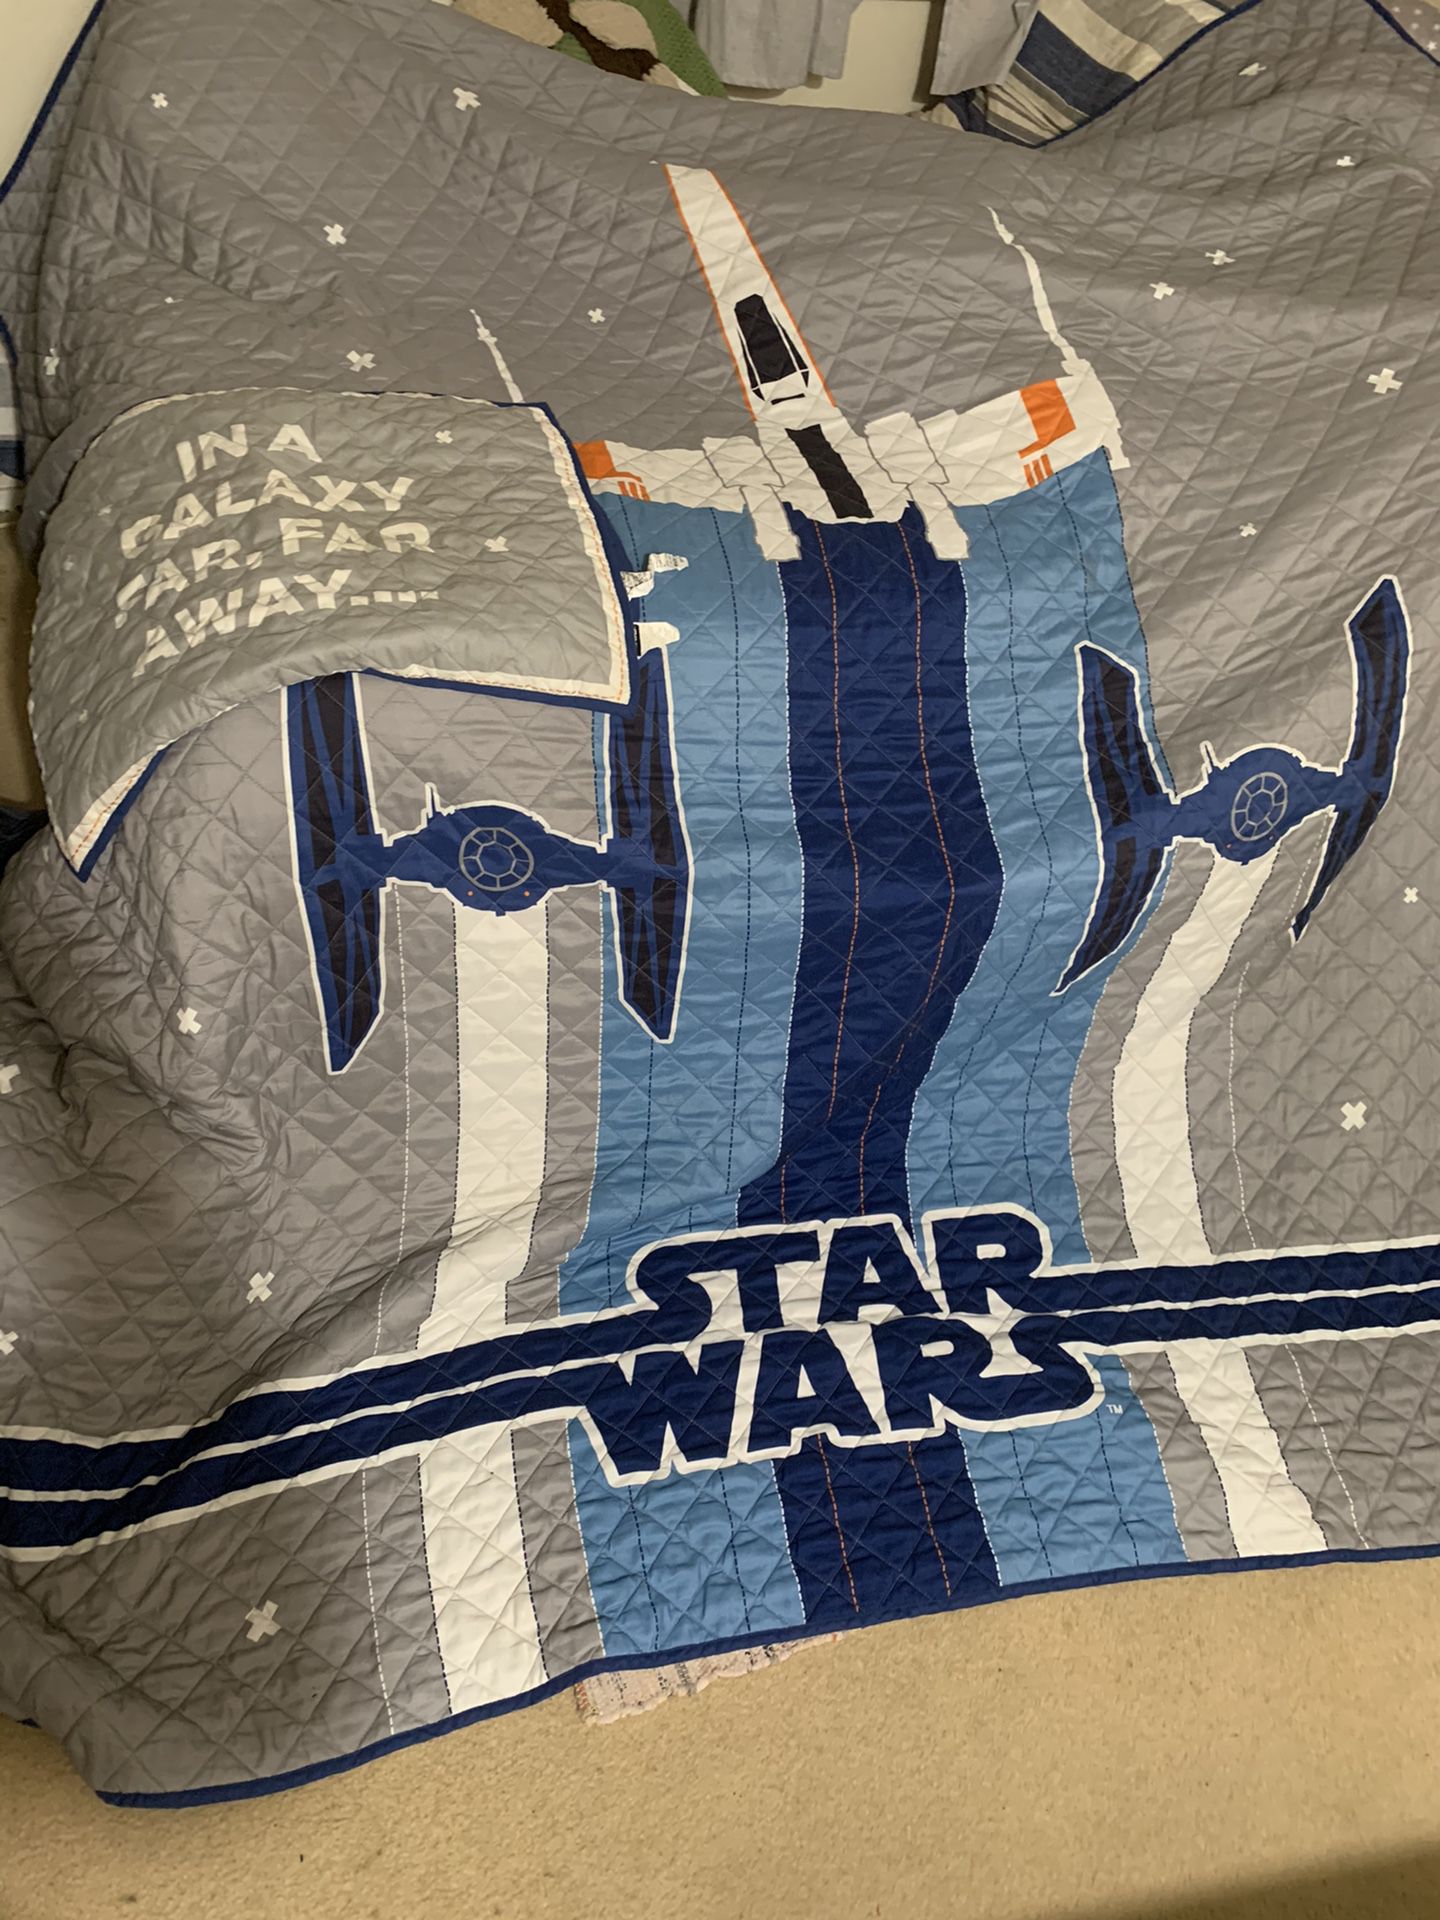 Star Wars bedding. Full size $35